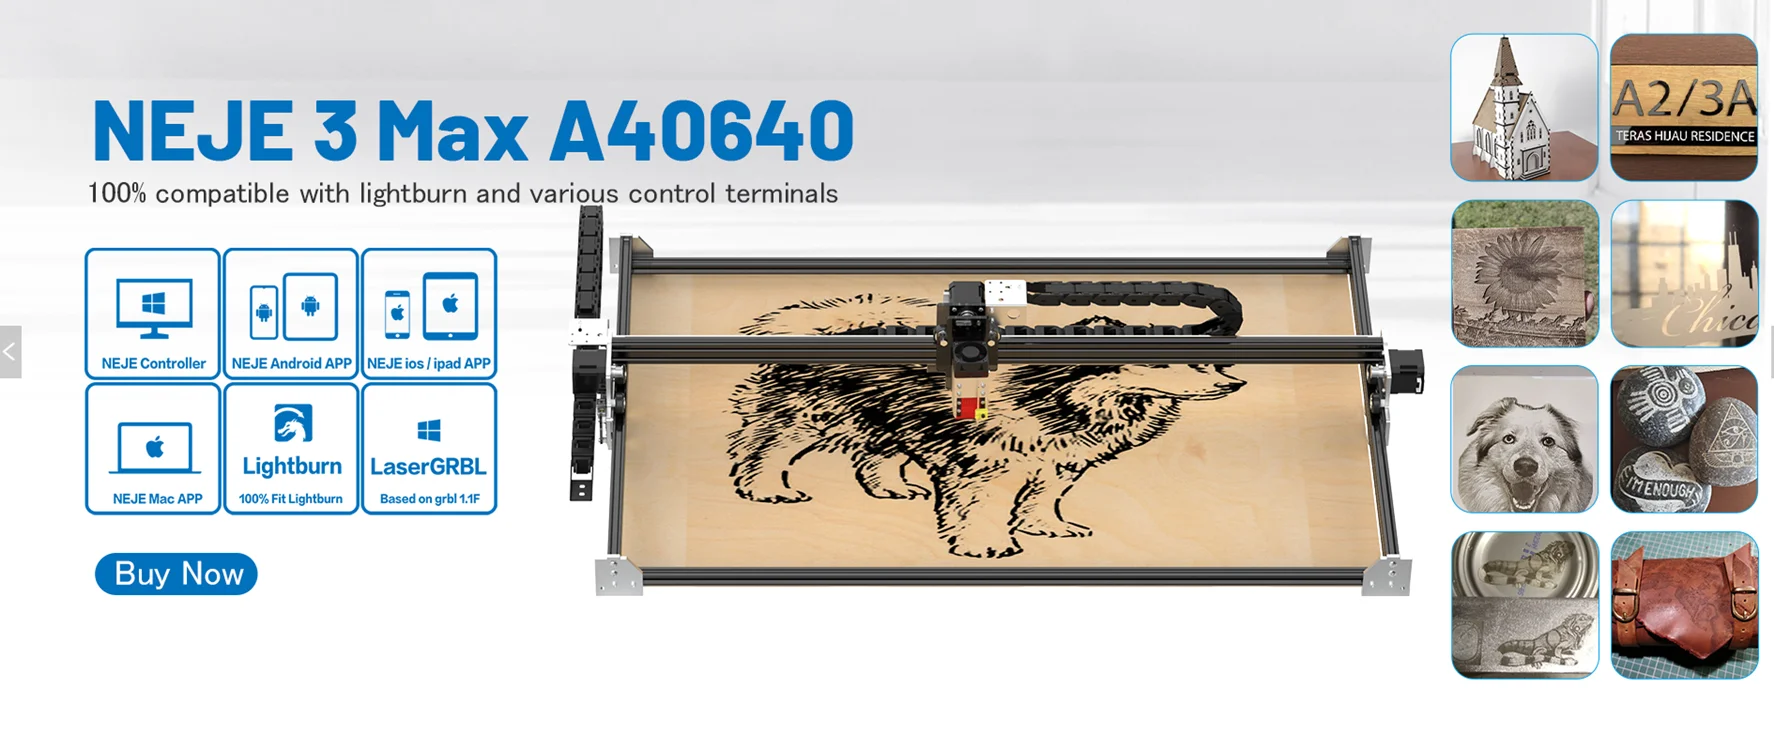 NEJE 3 20W40W Laser Engraving Cutting Machine Desktop Laser Engraver Cutter Printer CNC Router APP Control Upgraded Version wood locator